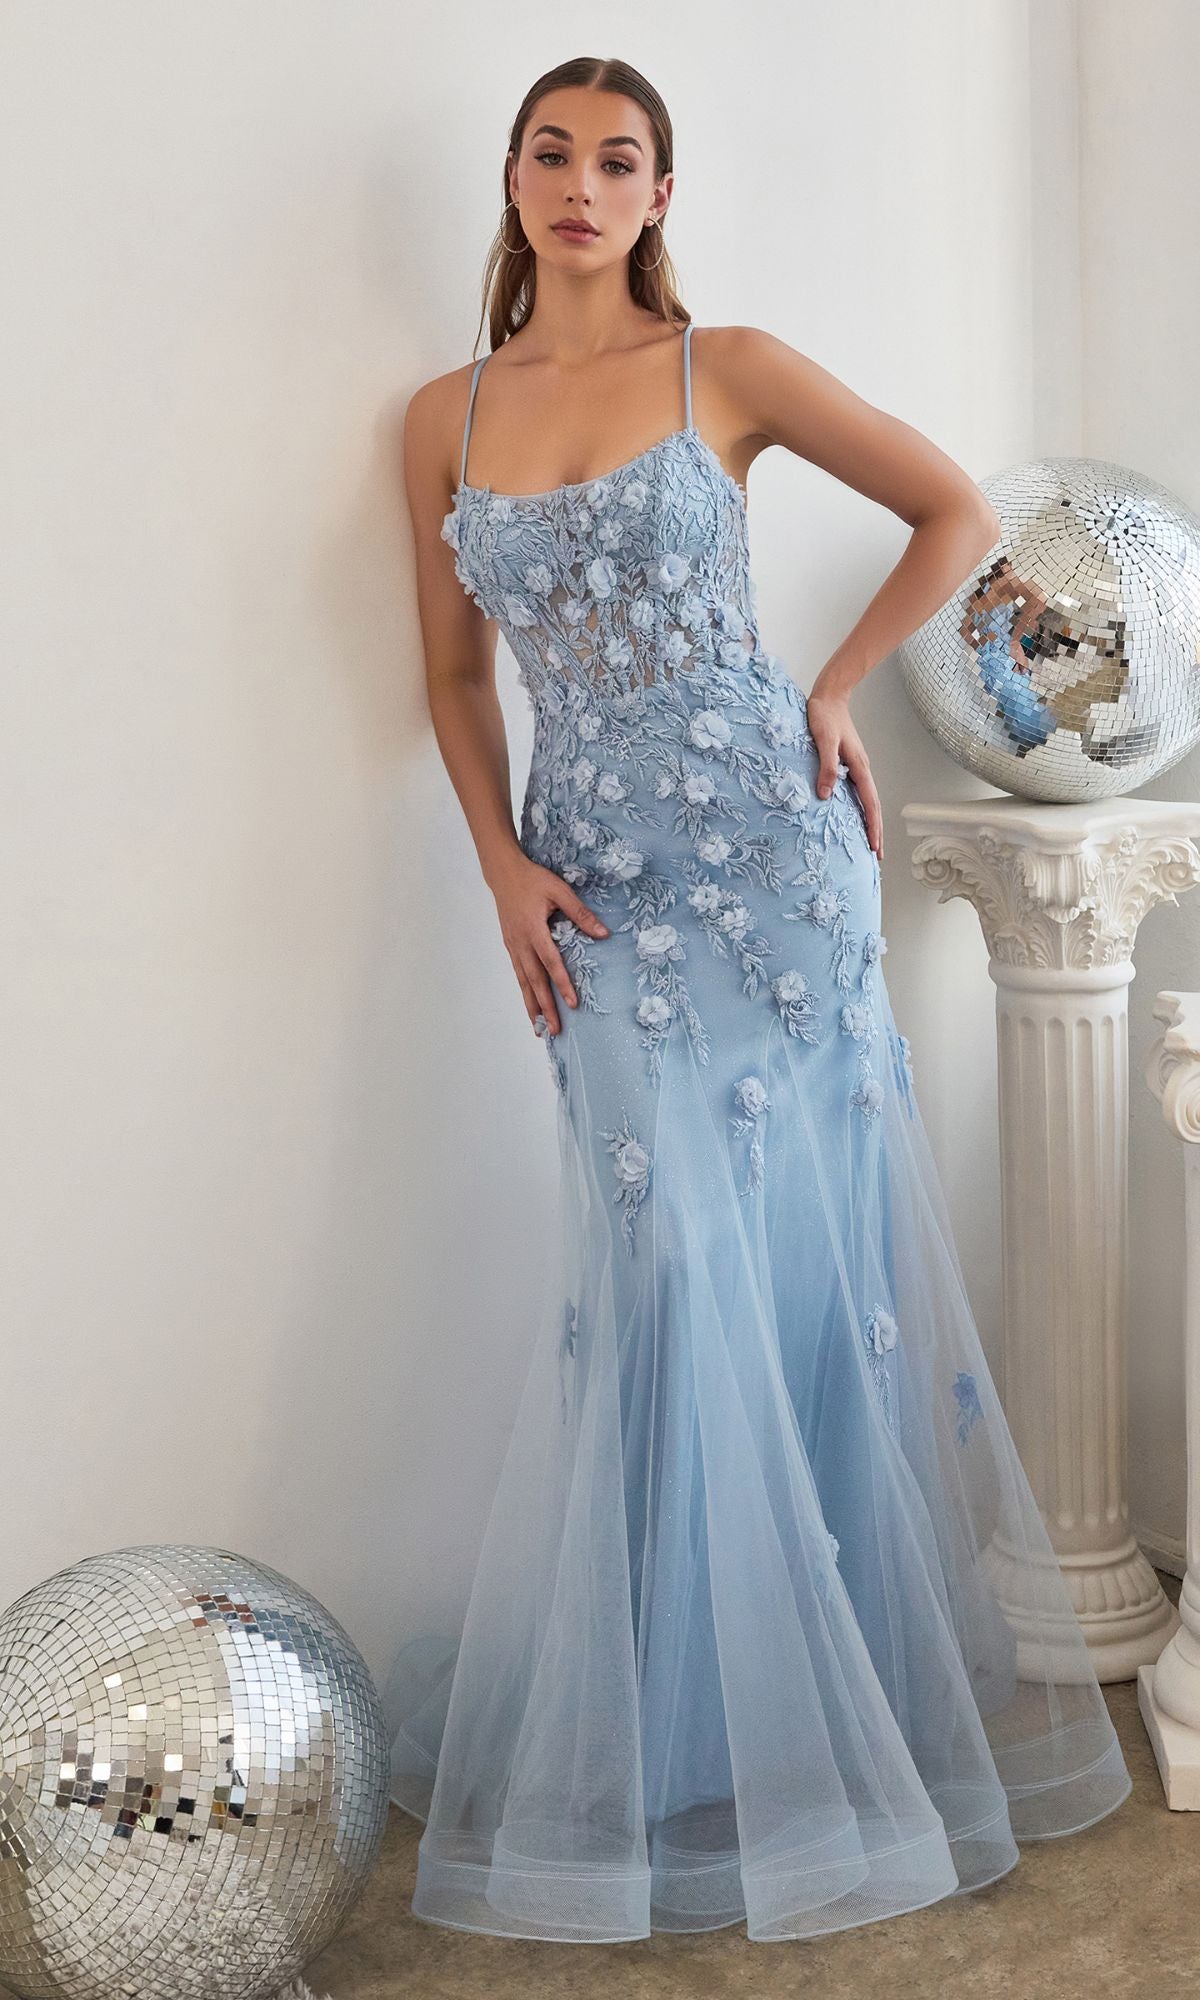 Floral-Applique Long Mermaid Prom Dress CD995